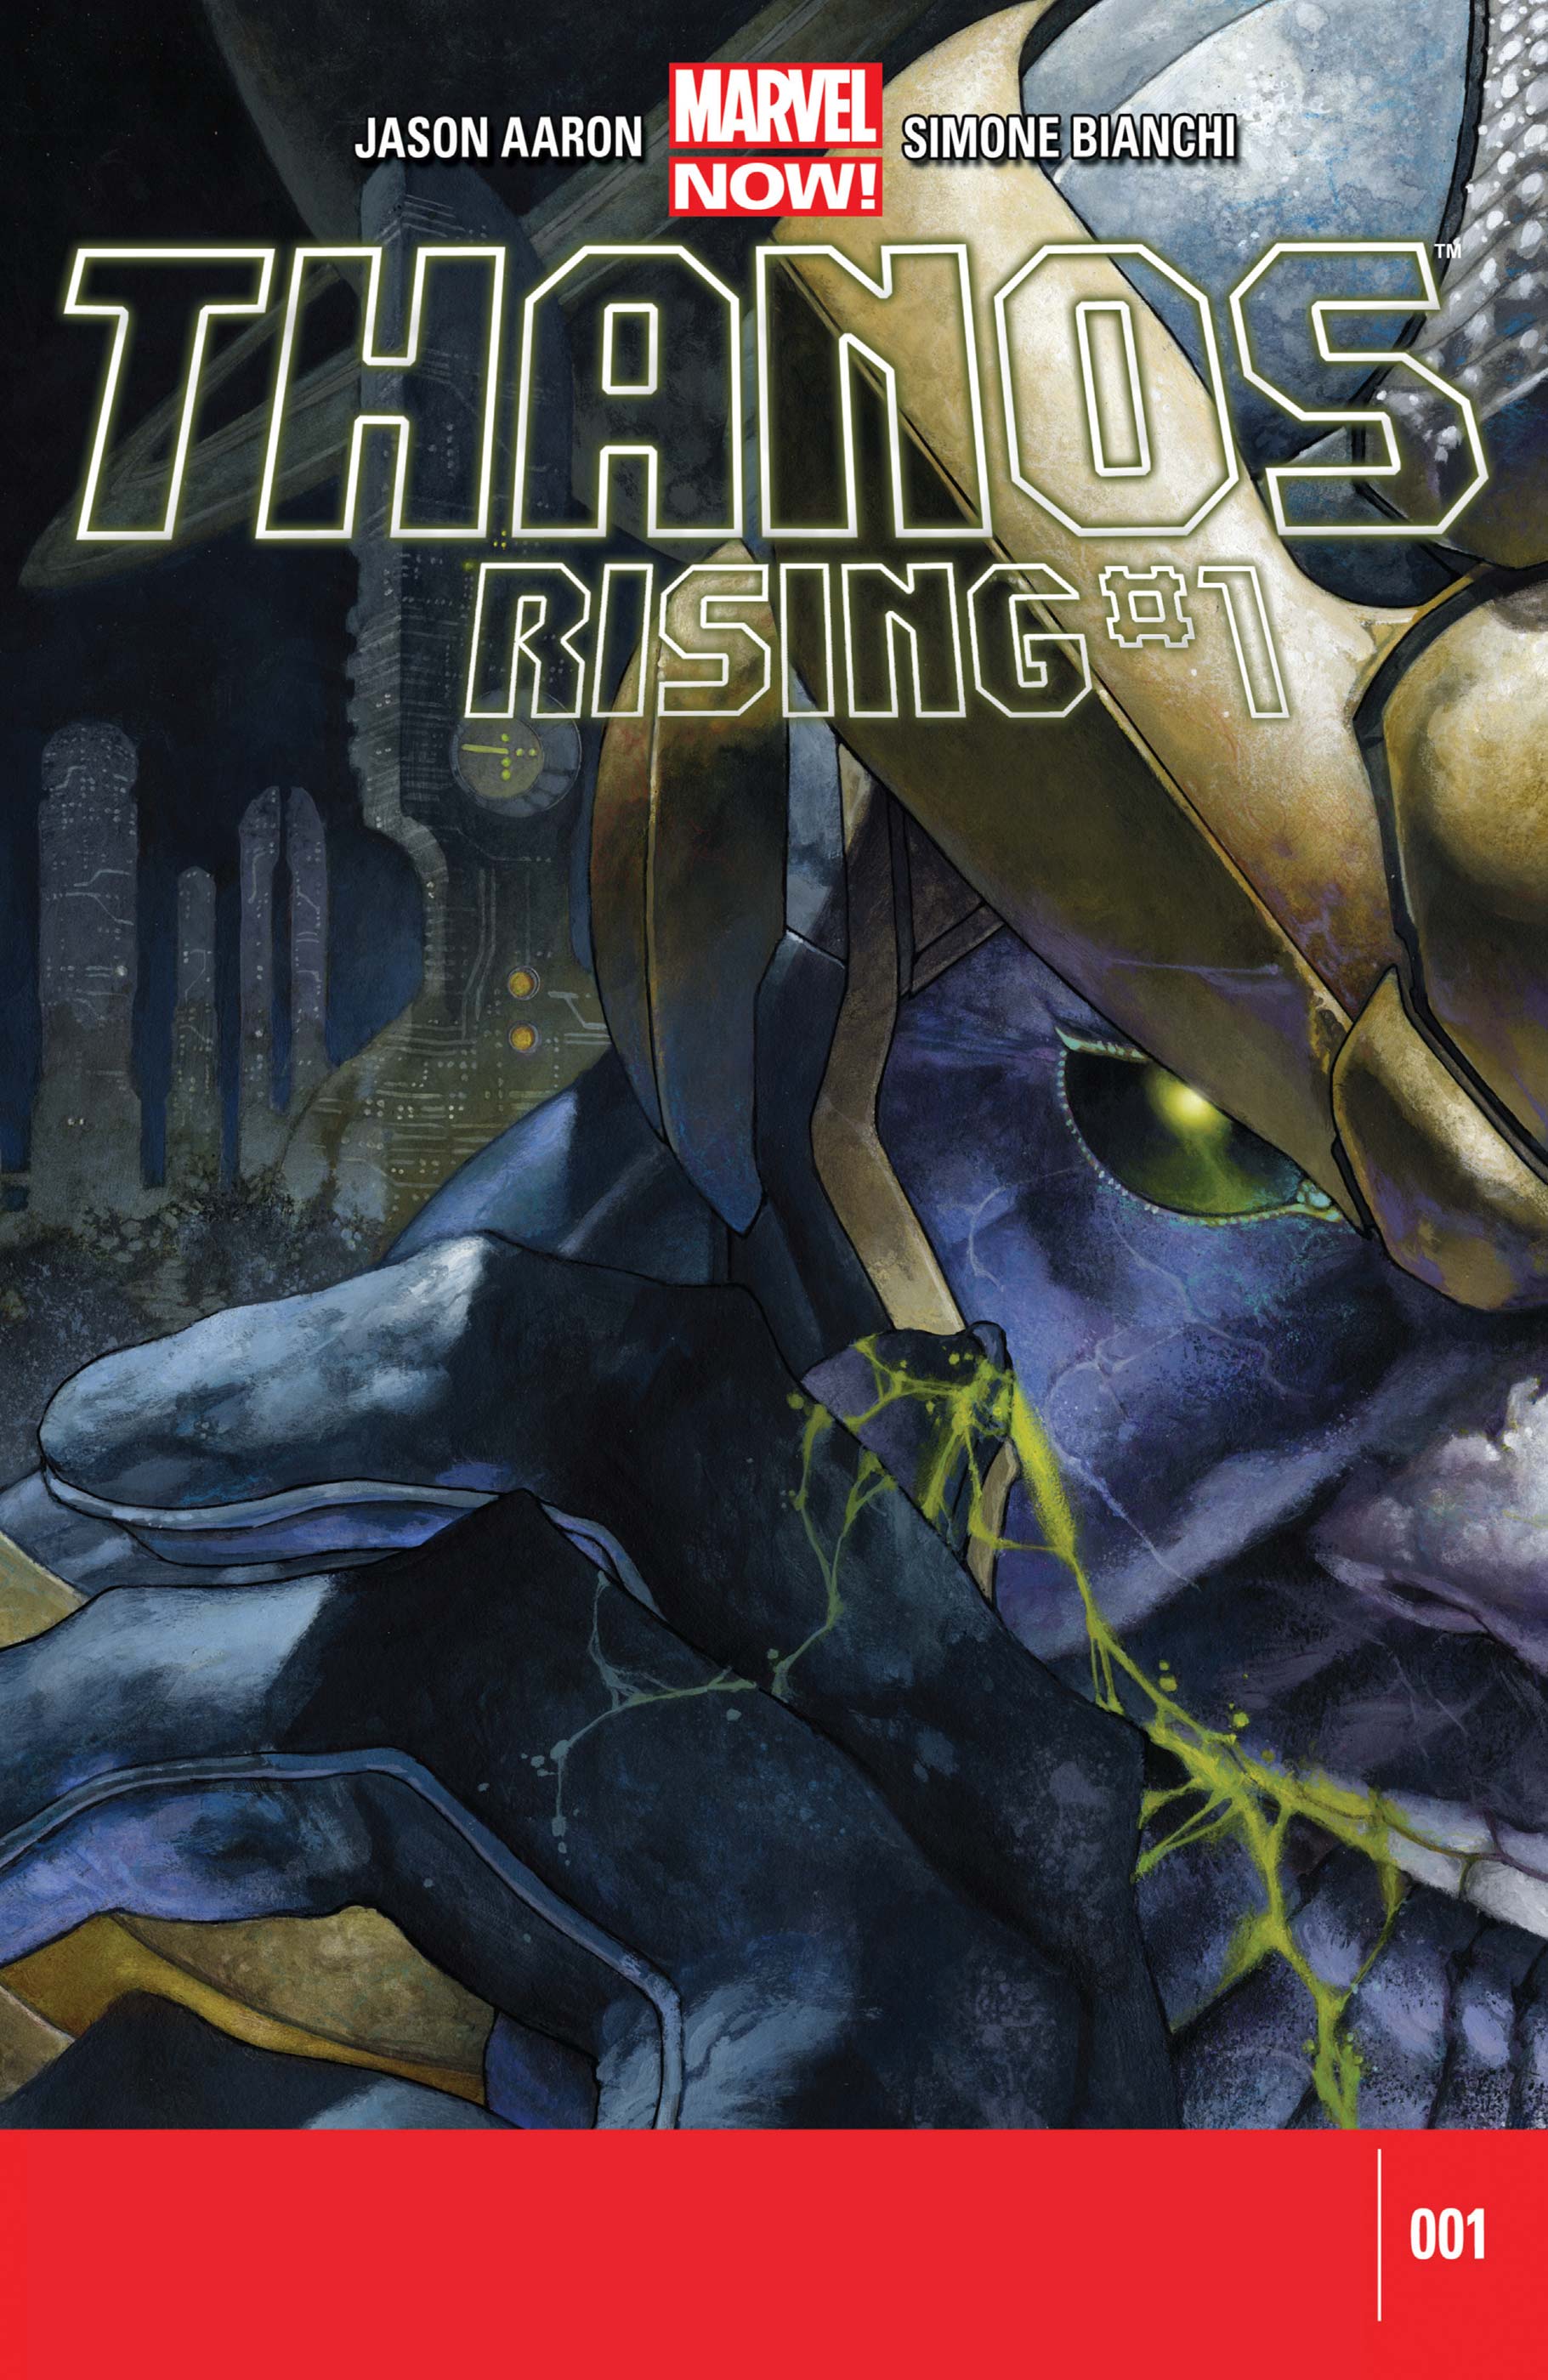 Thanos Rising (2013) #1